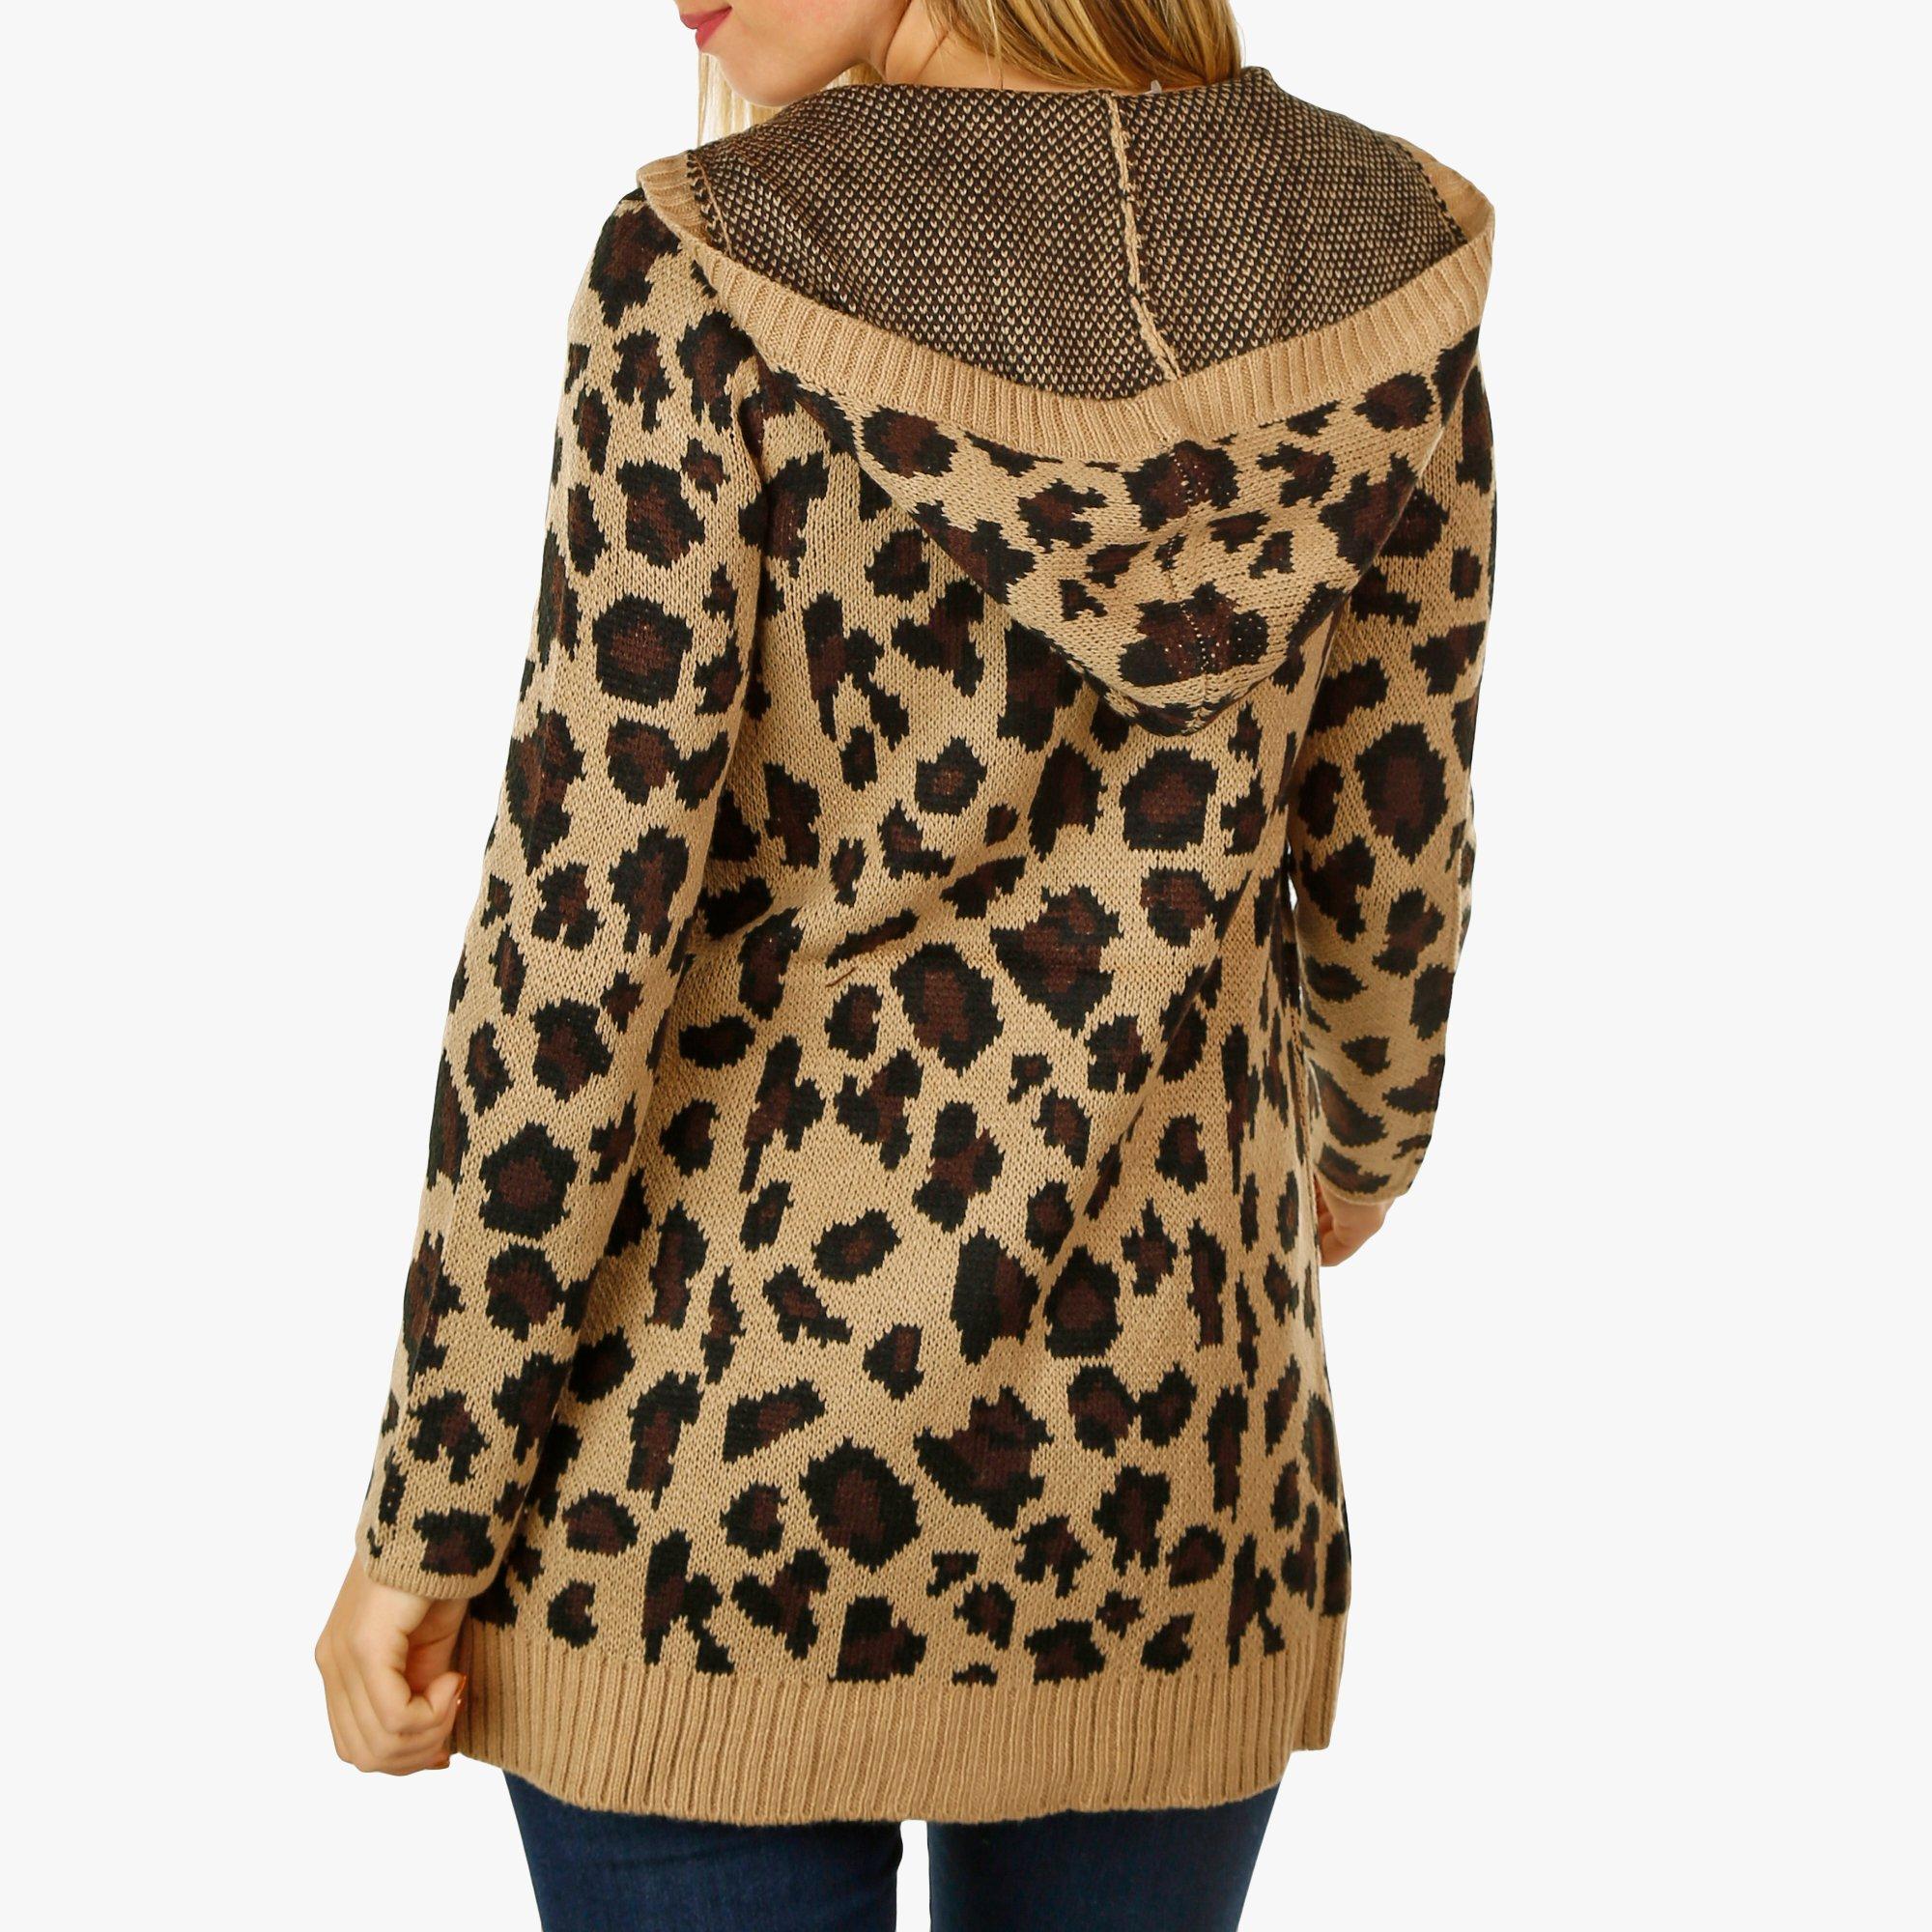 leopard print hooded cardigan